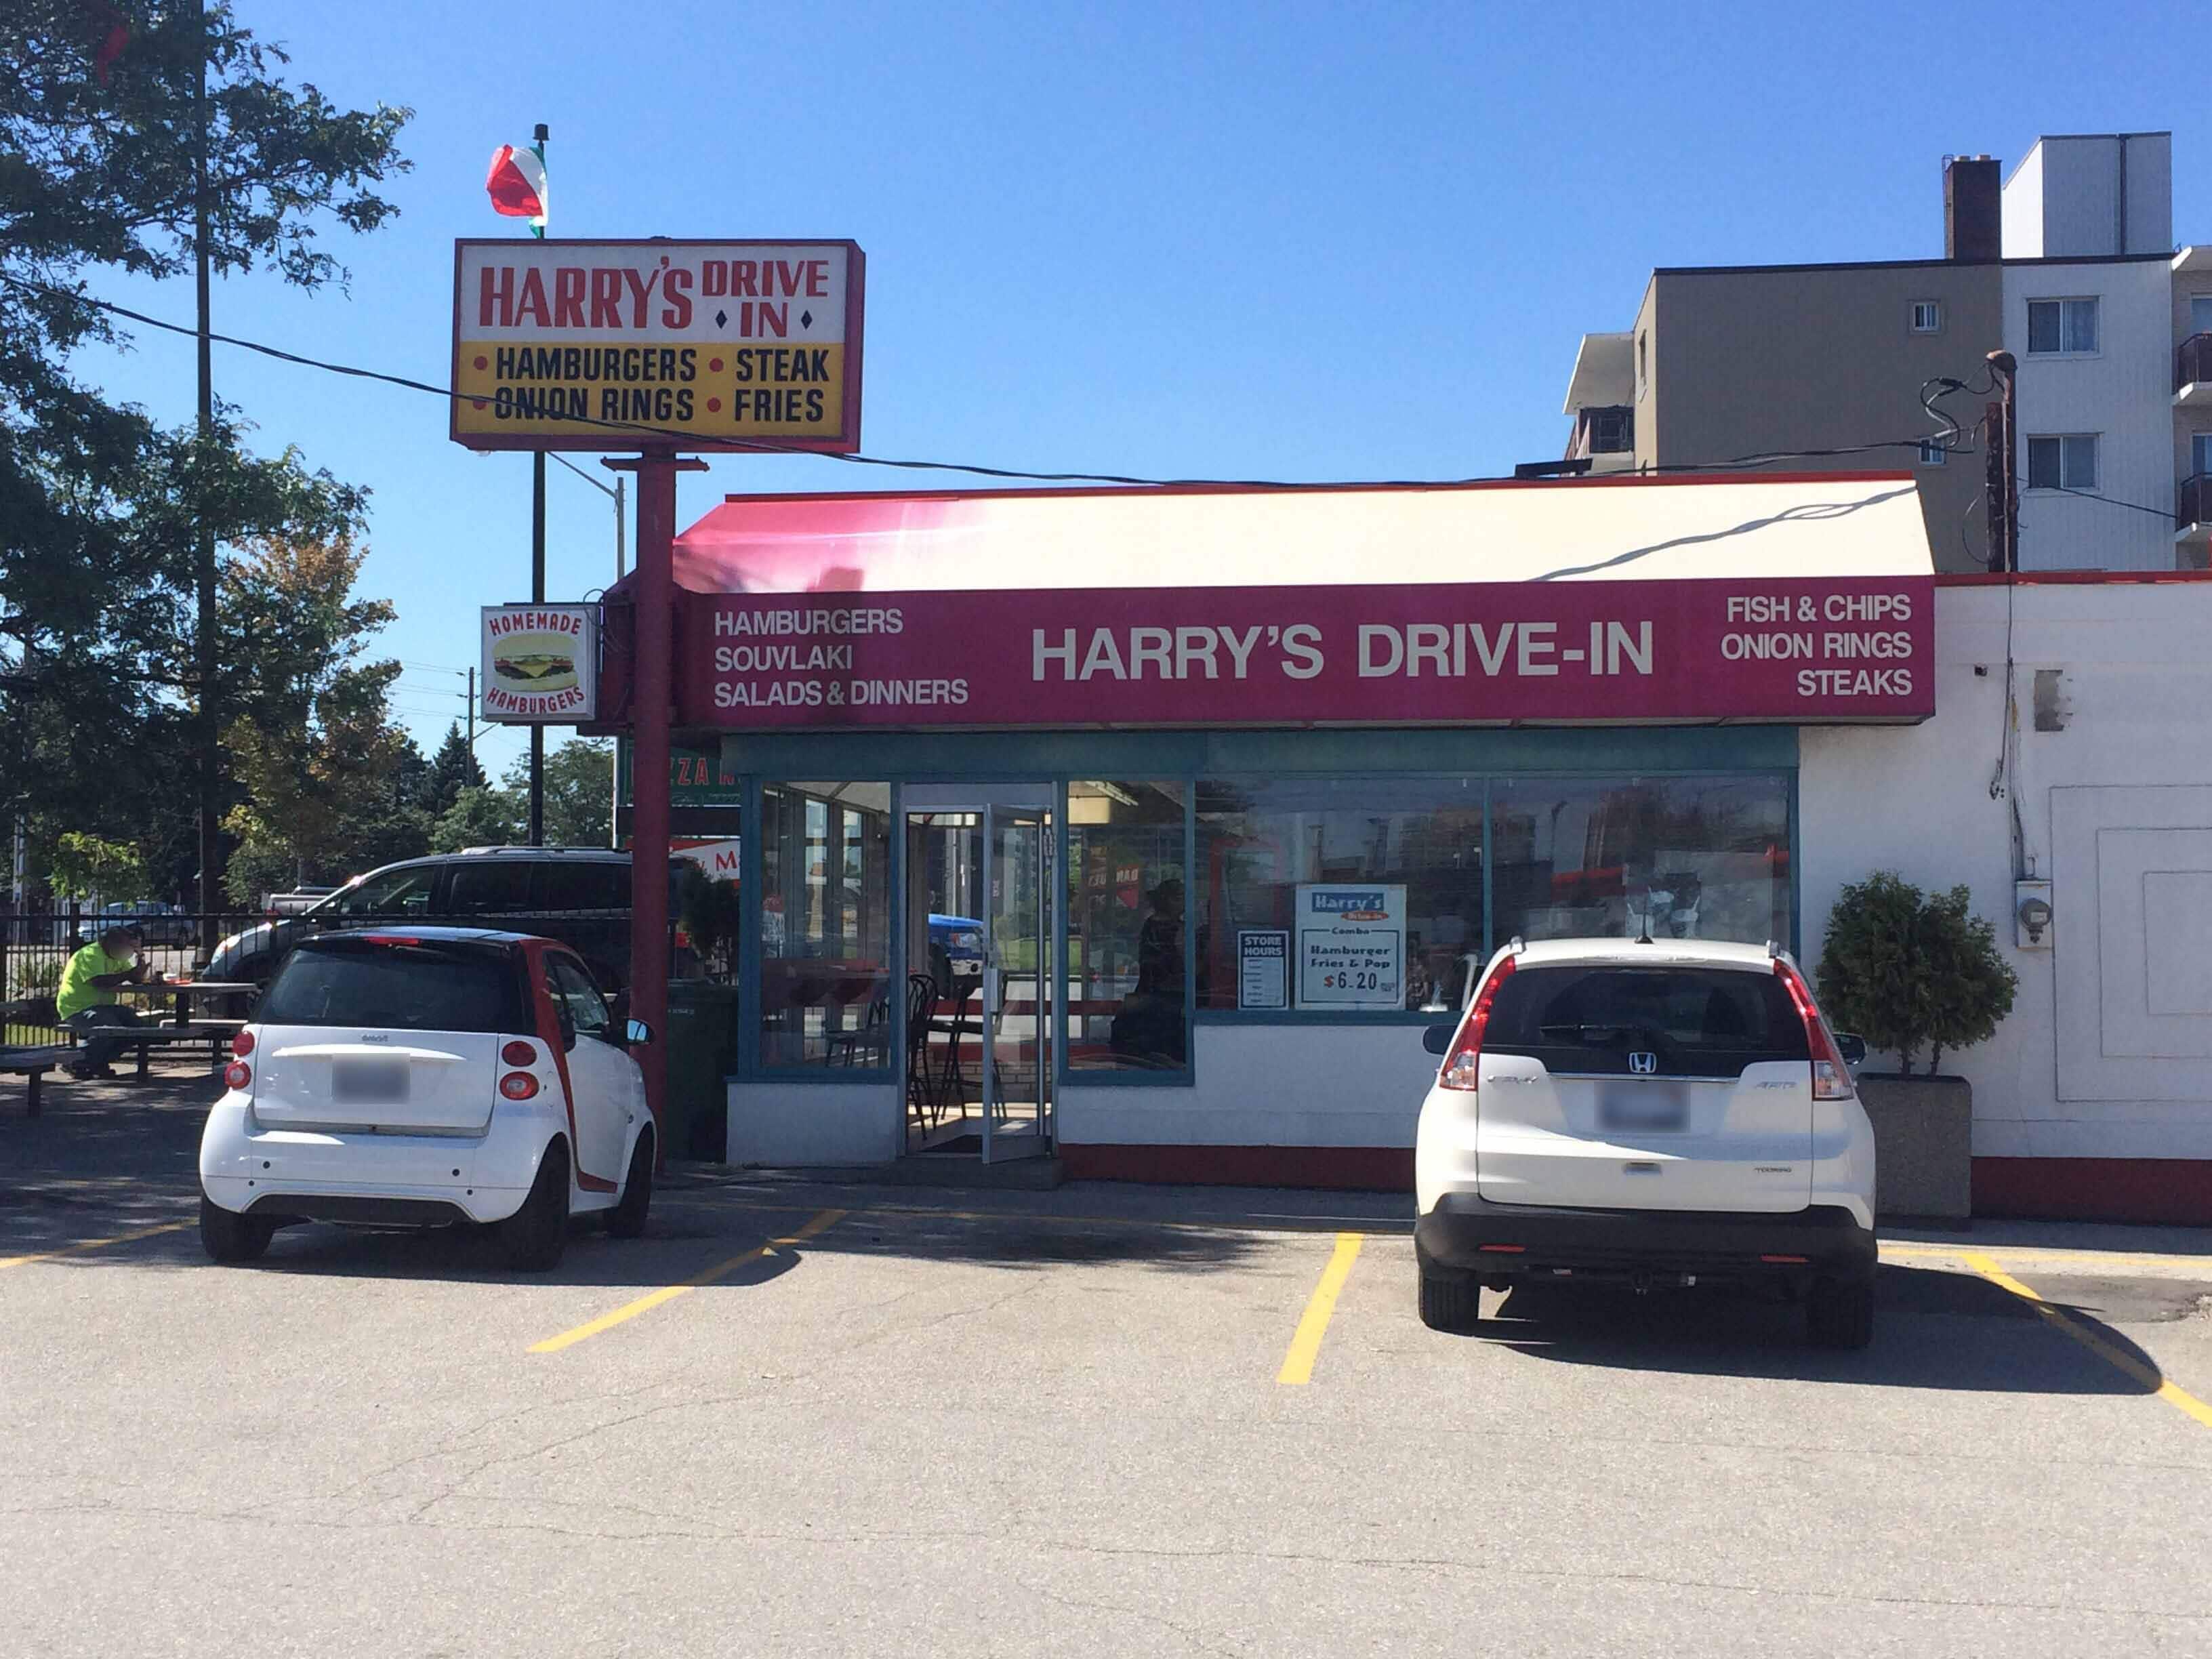 Harry's Drive-in